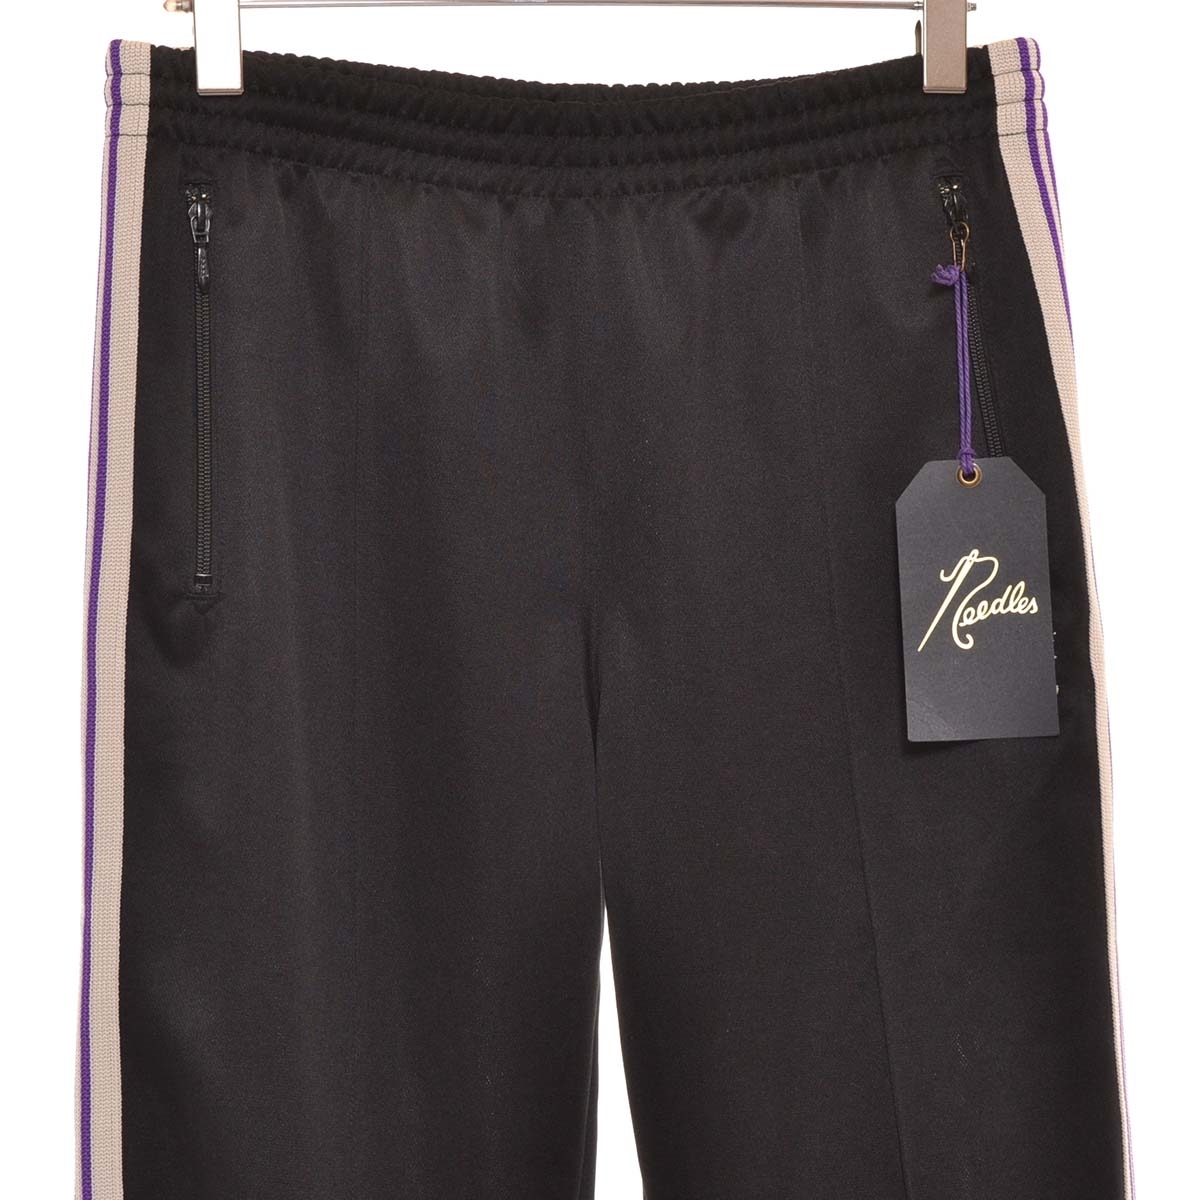 *509811 Needles Needles NEPENTHES * truck pants jogger Zipped Track Pants MR414 size M men's black white purple 